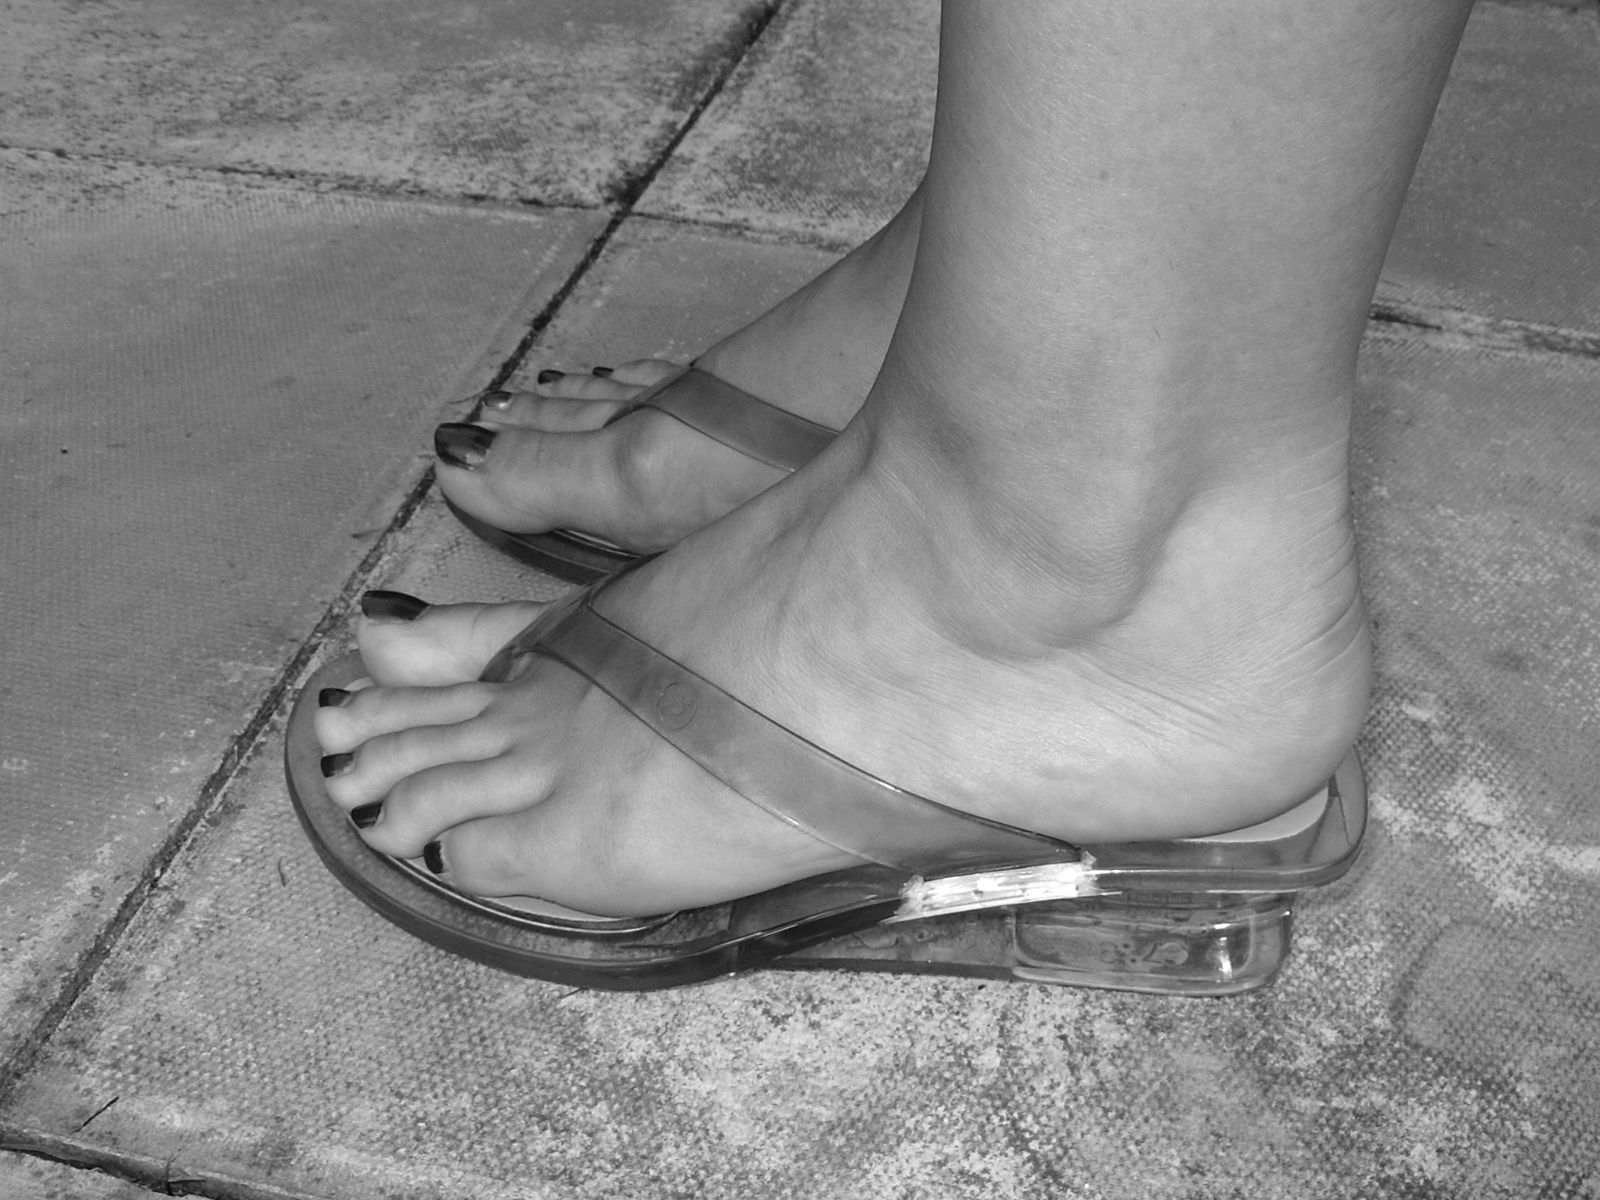 Candid sexy teens feet sandals photos